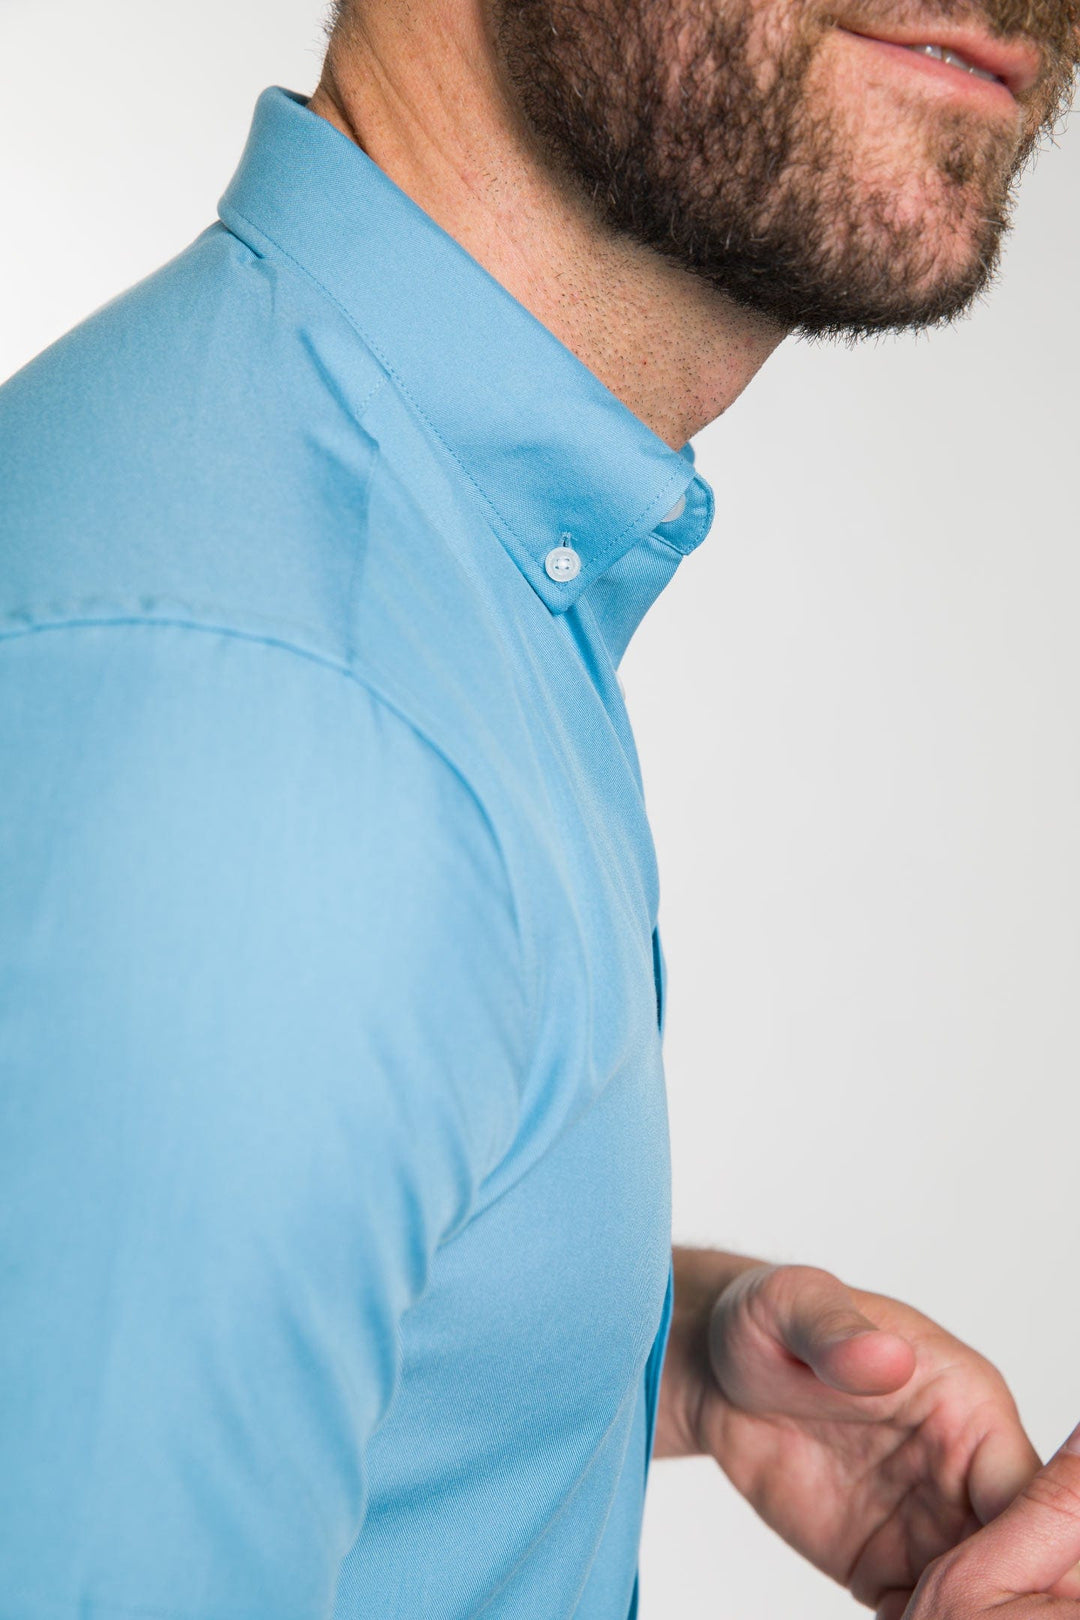 Buy Tropic Oceans Floral Plaid Short Sleeve Shirt for Short Men | Ash & Erie   Short Sleeve Everyday Shirts